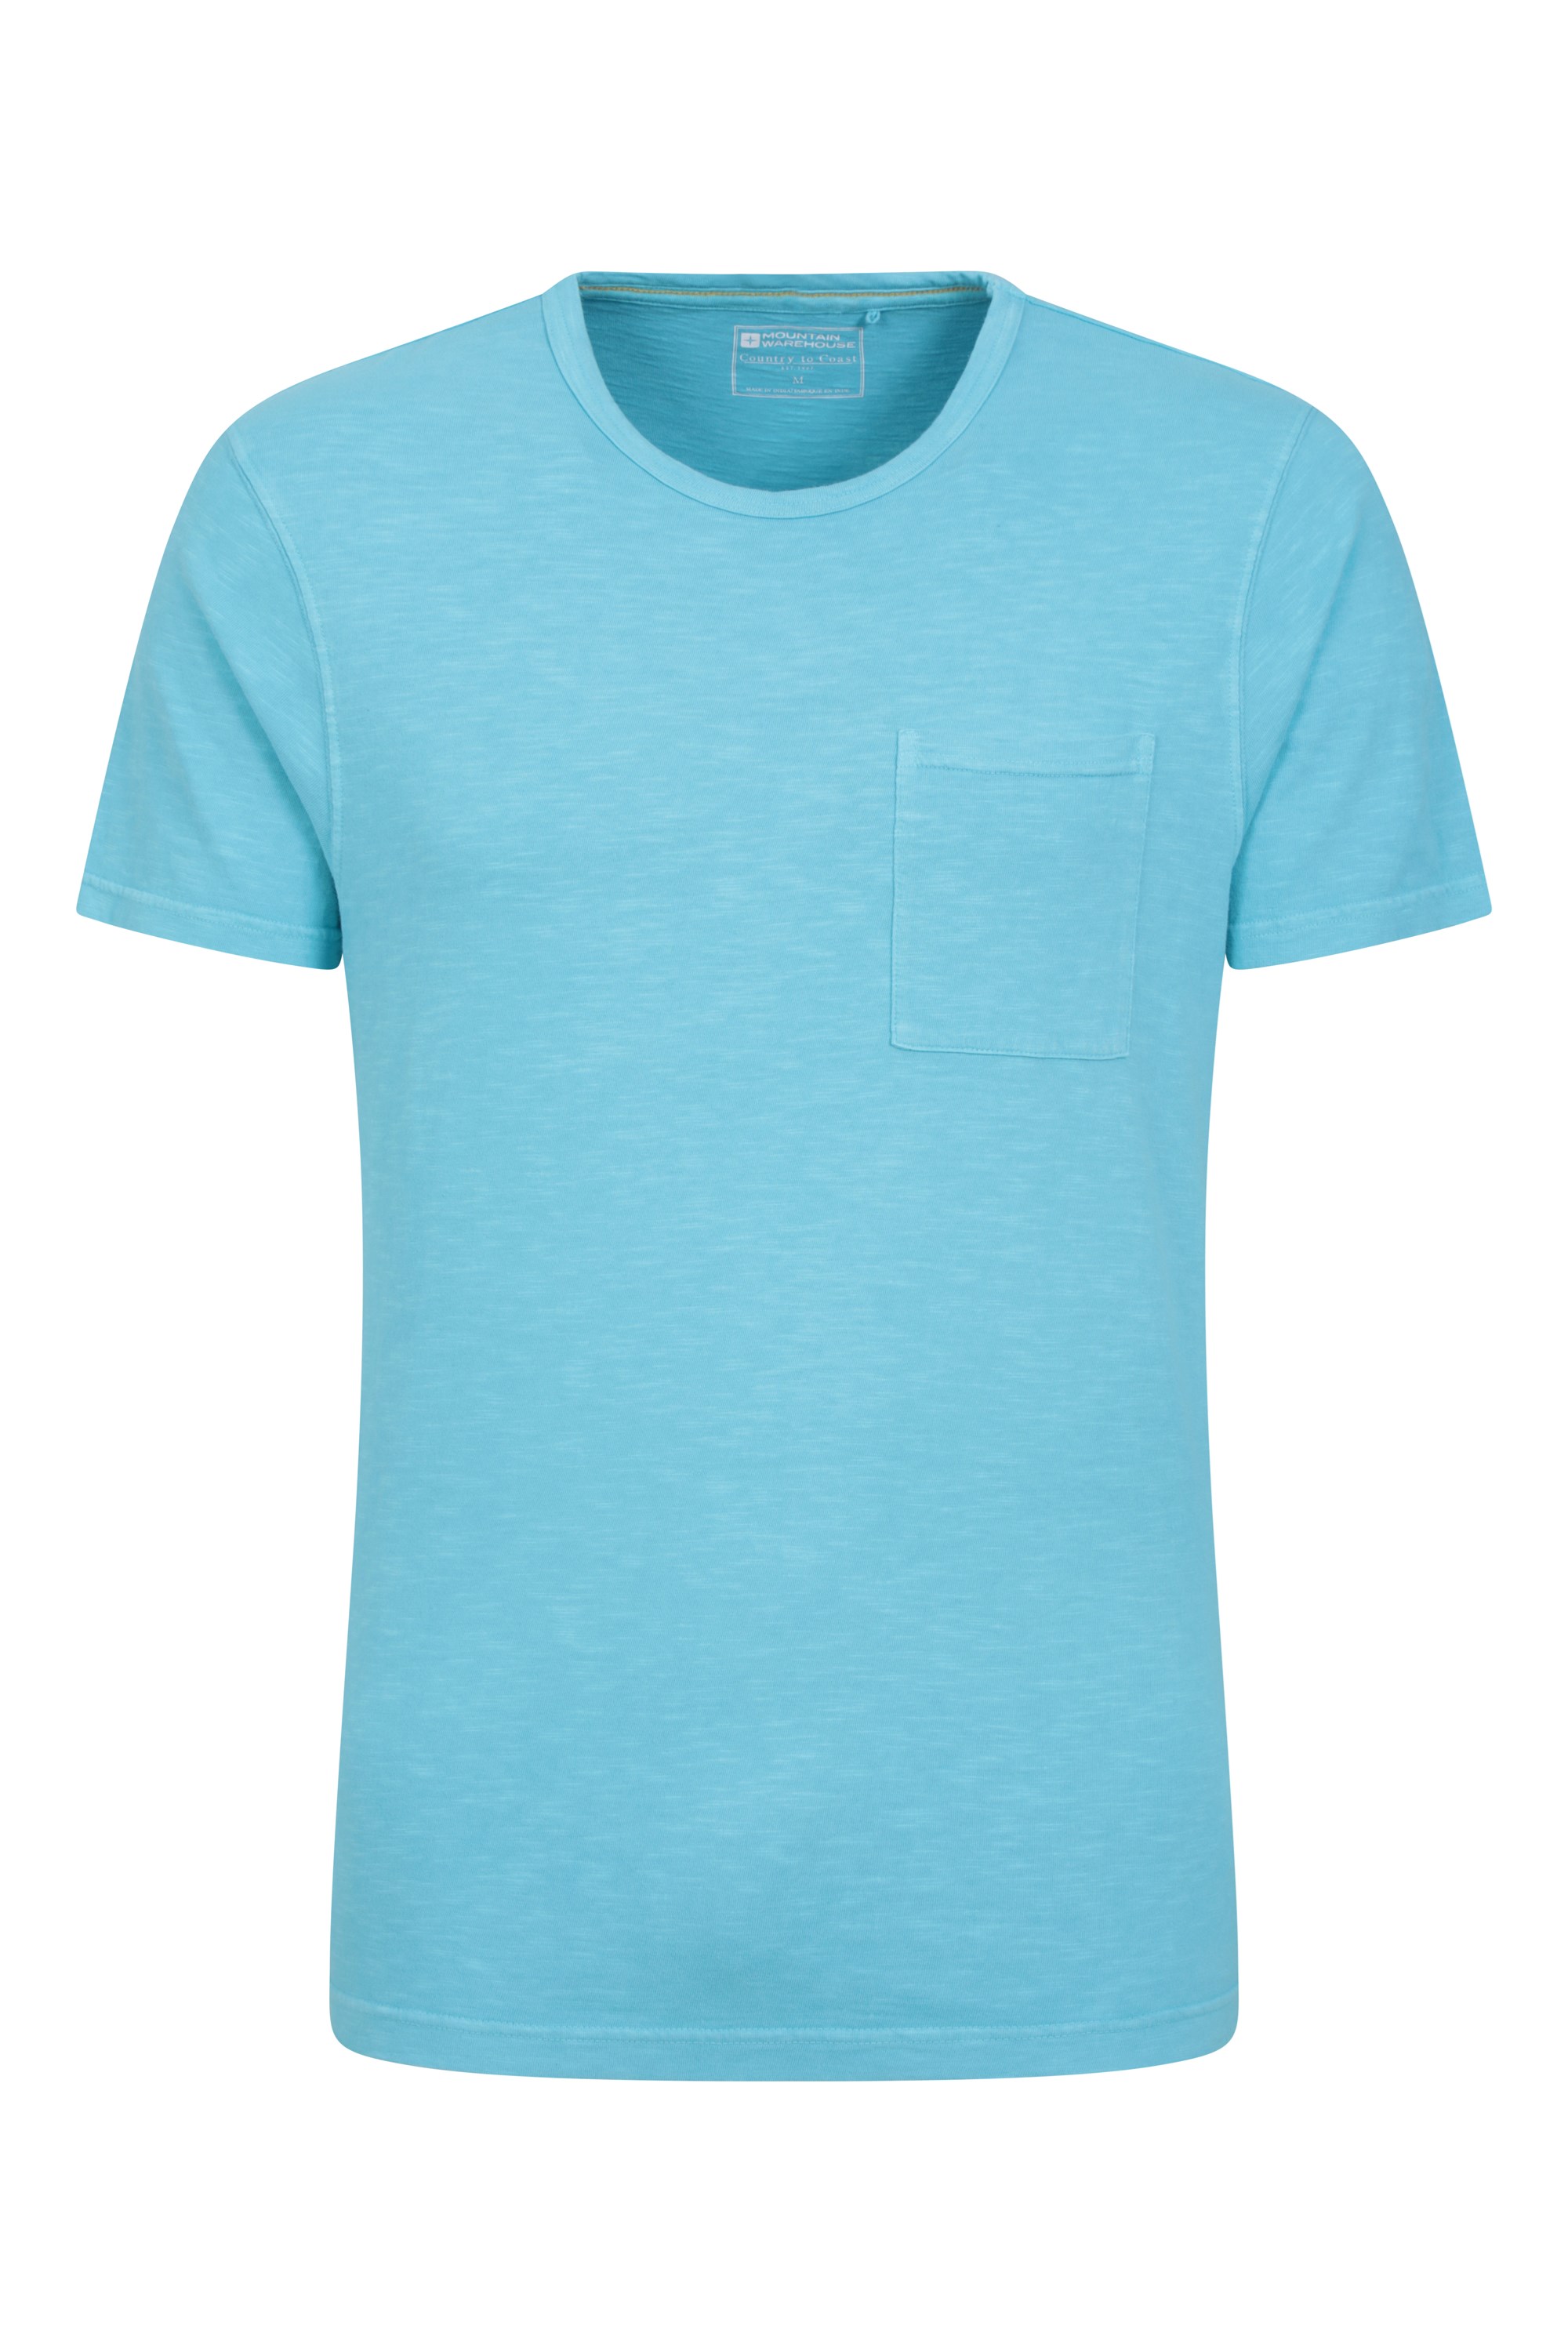 Fescue Mens Pocket T-shirt - Blue